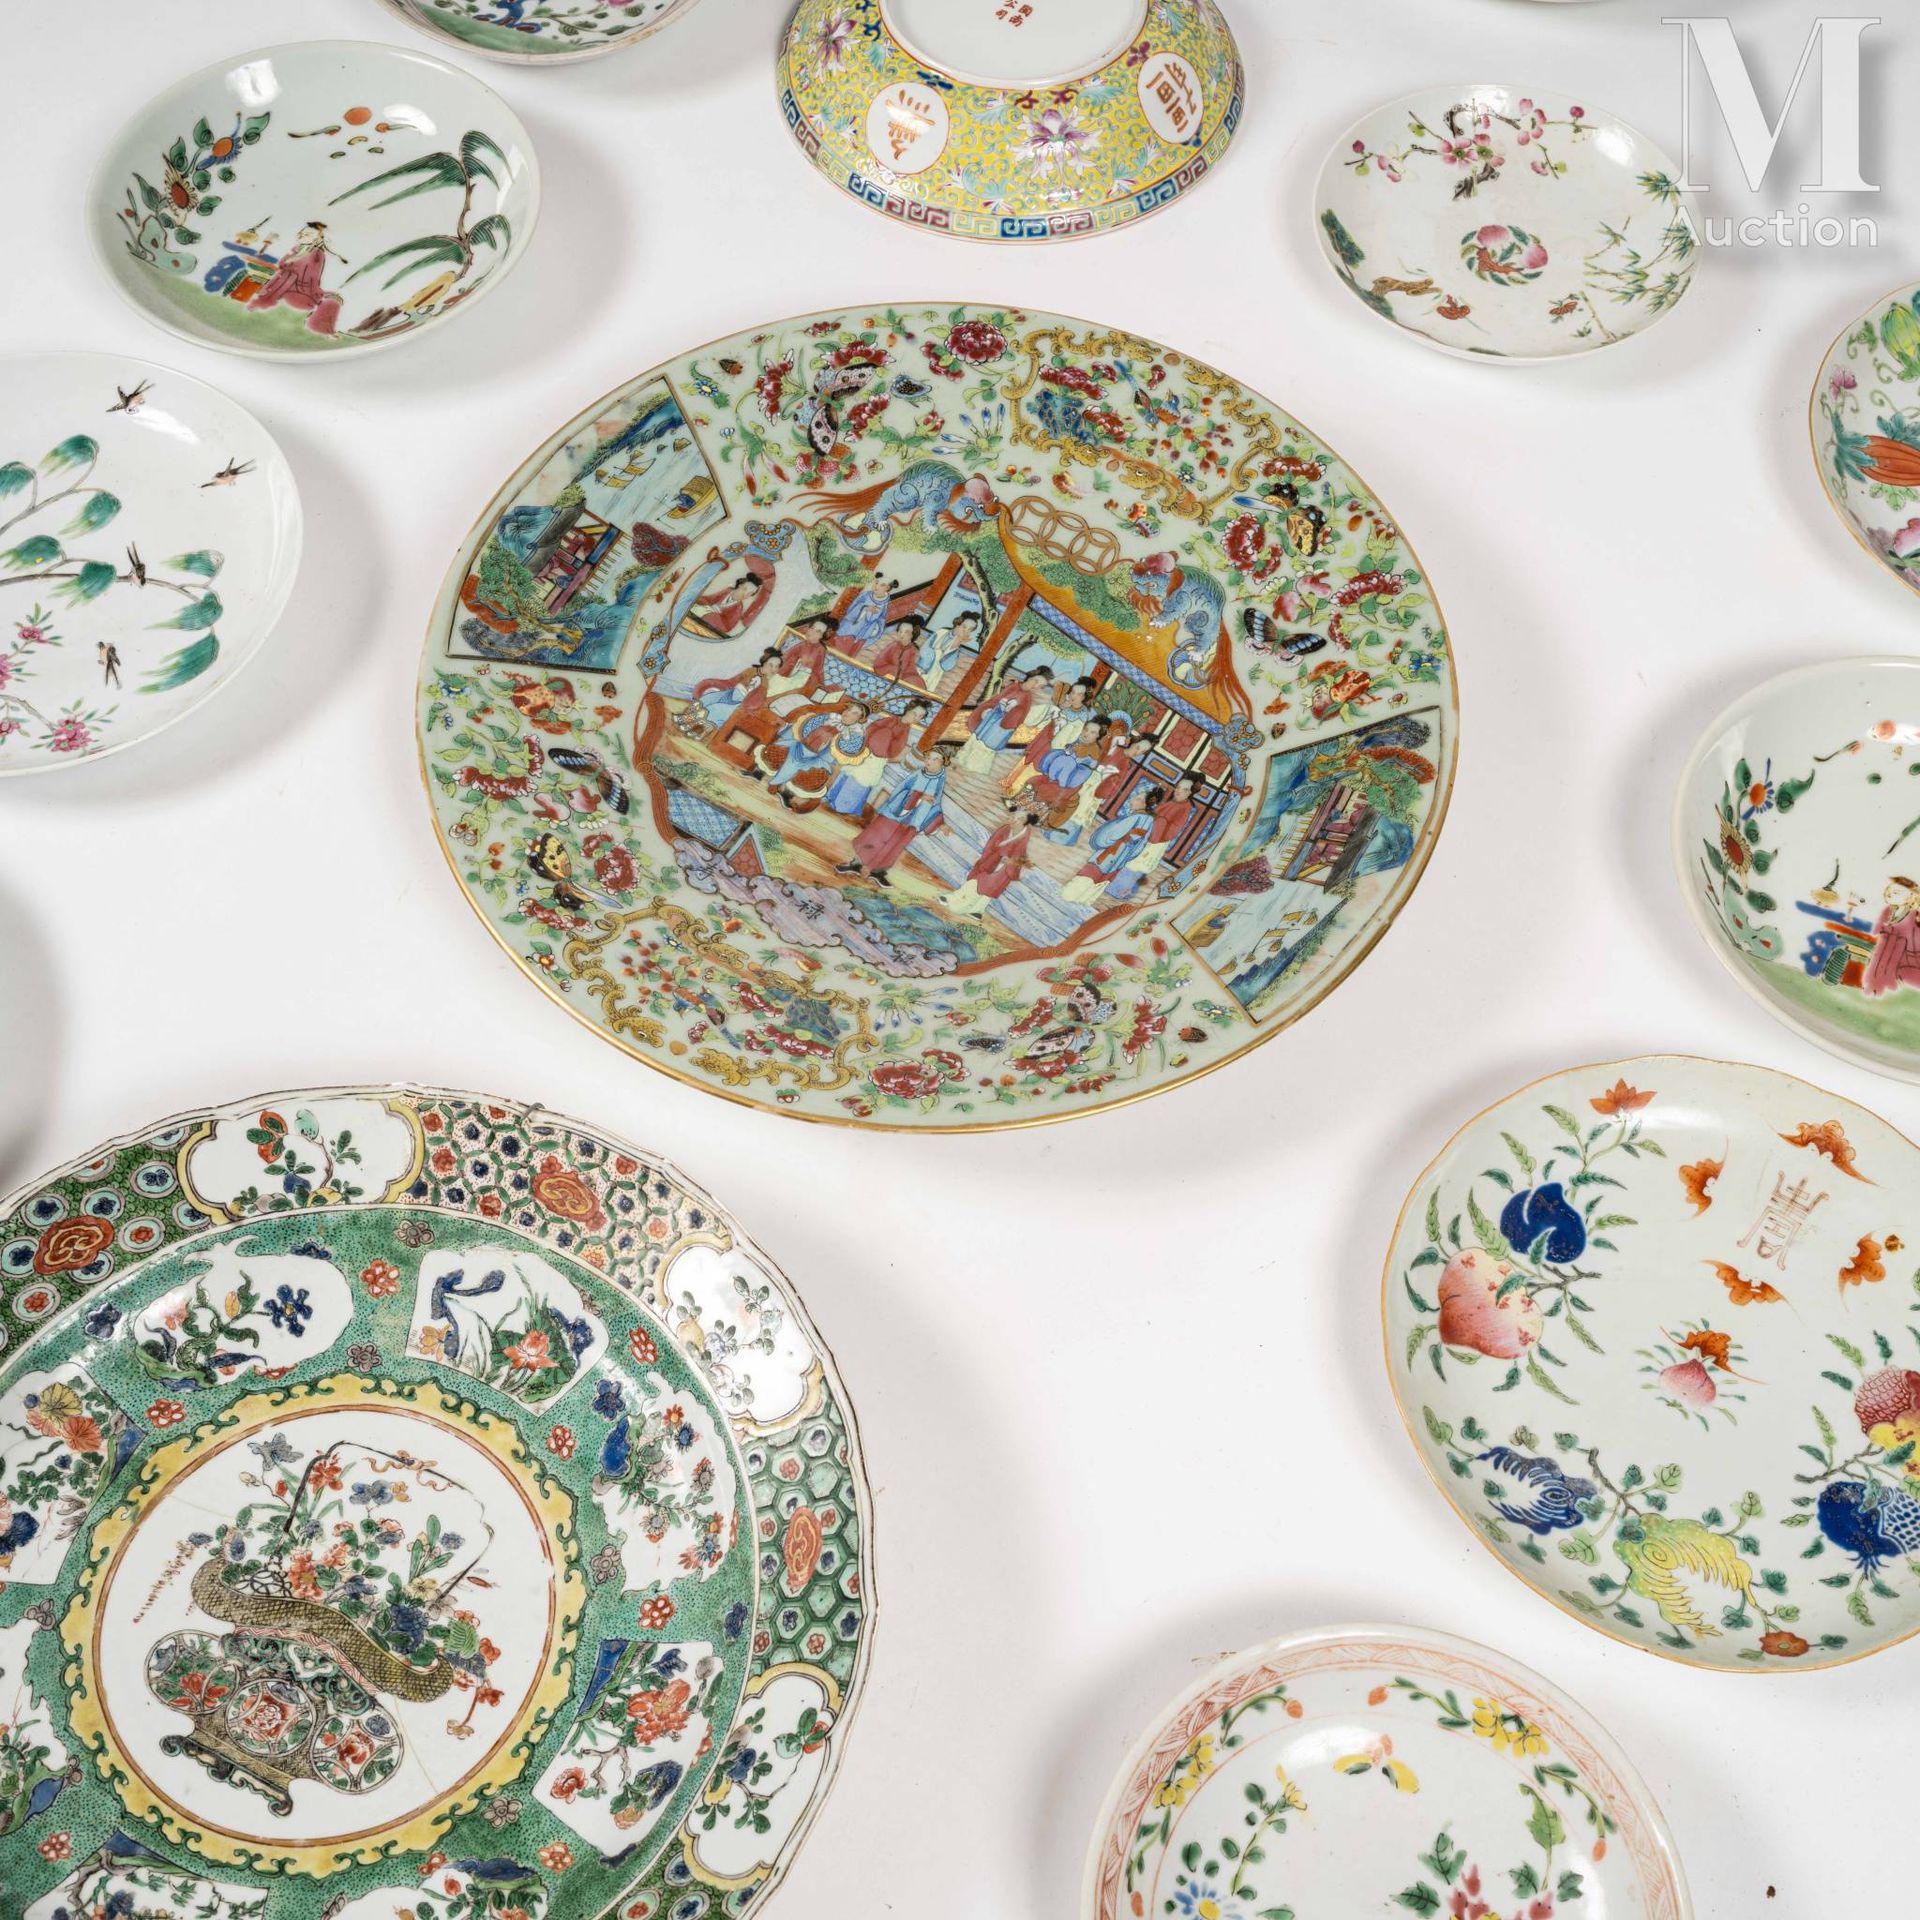 CHINE, XIX-XXe siècle 一批重要的多色珐琅装饰的瓷器，包括两个圆盘，十四个盘子，五个碗。

遗漏、修复、裂缝。